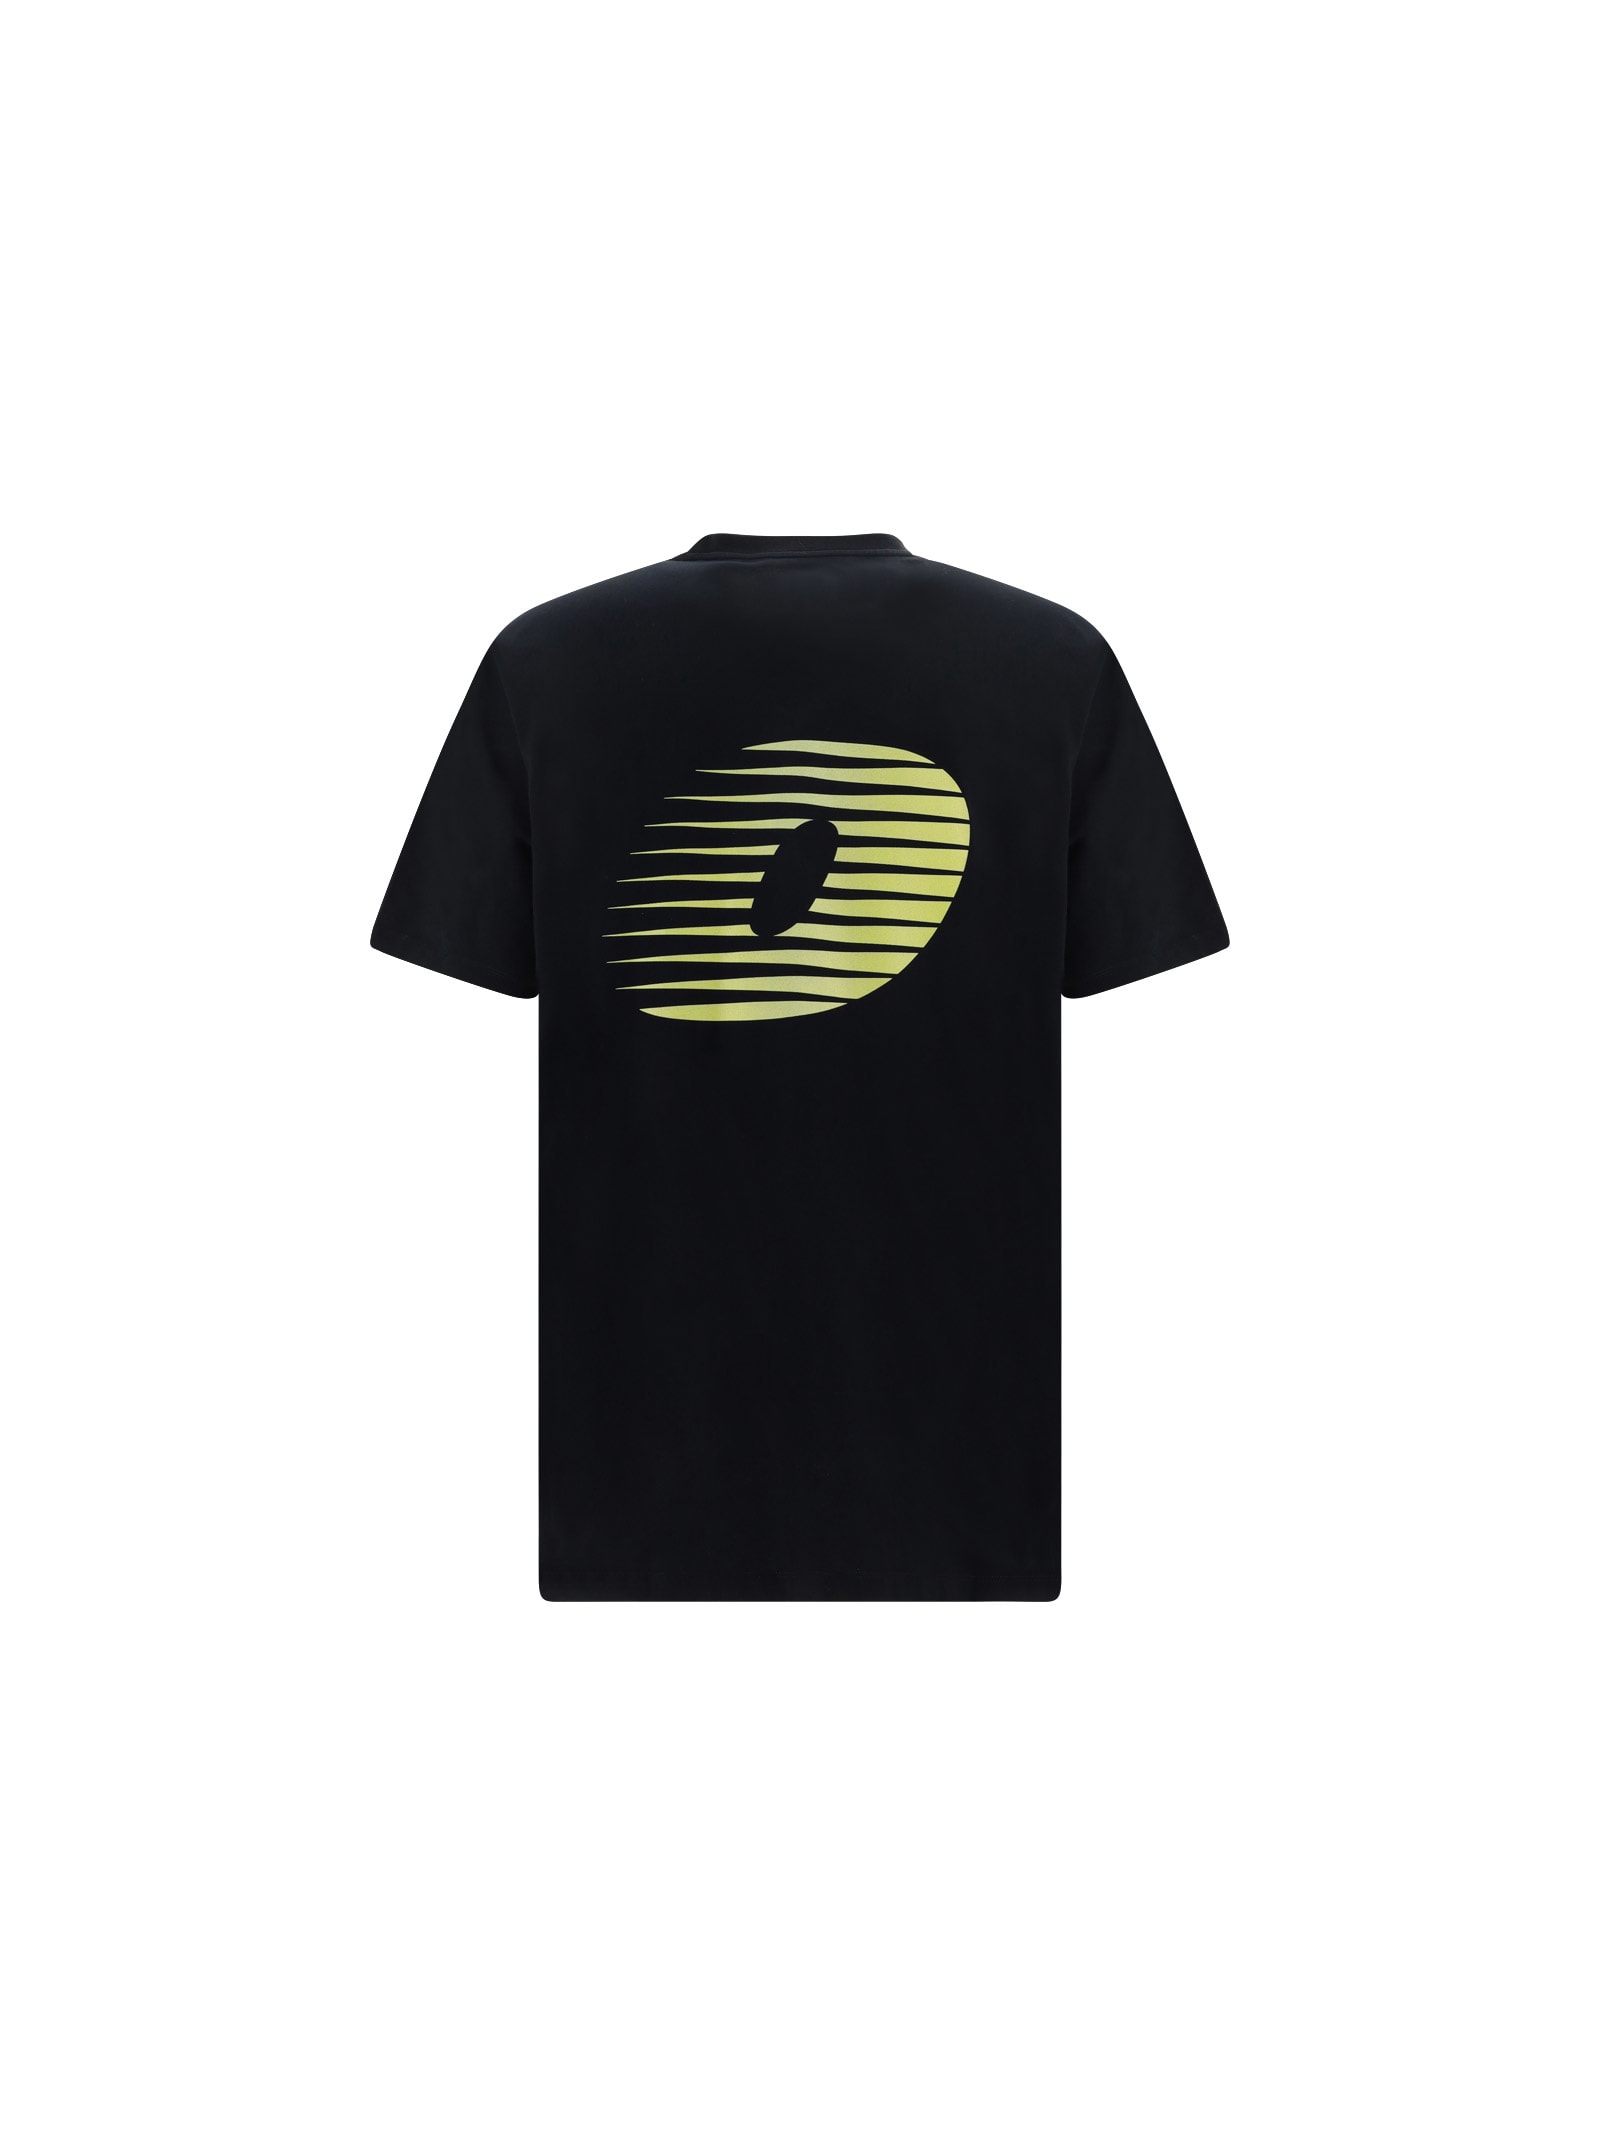 Shop Oamc Speed T-shirt In Black